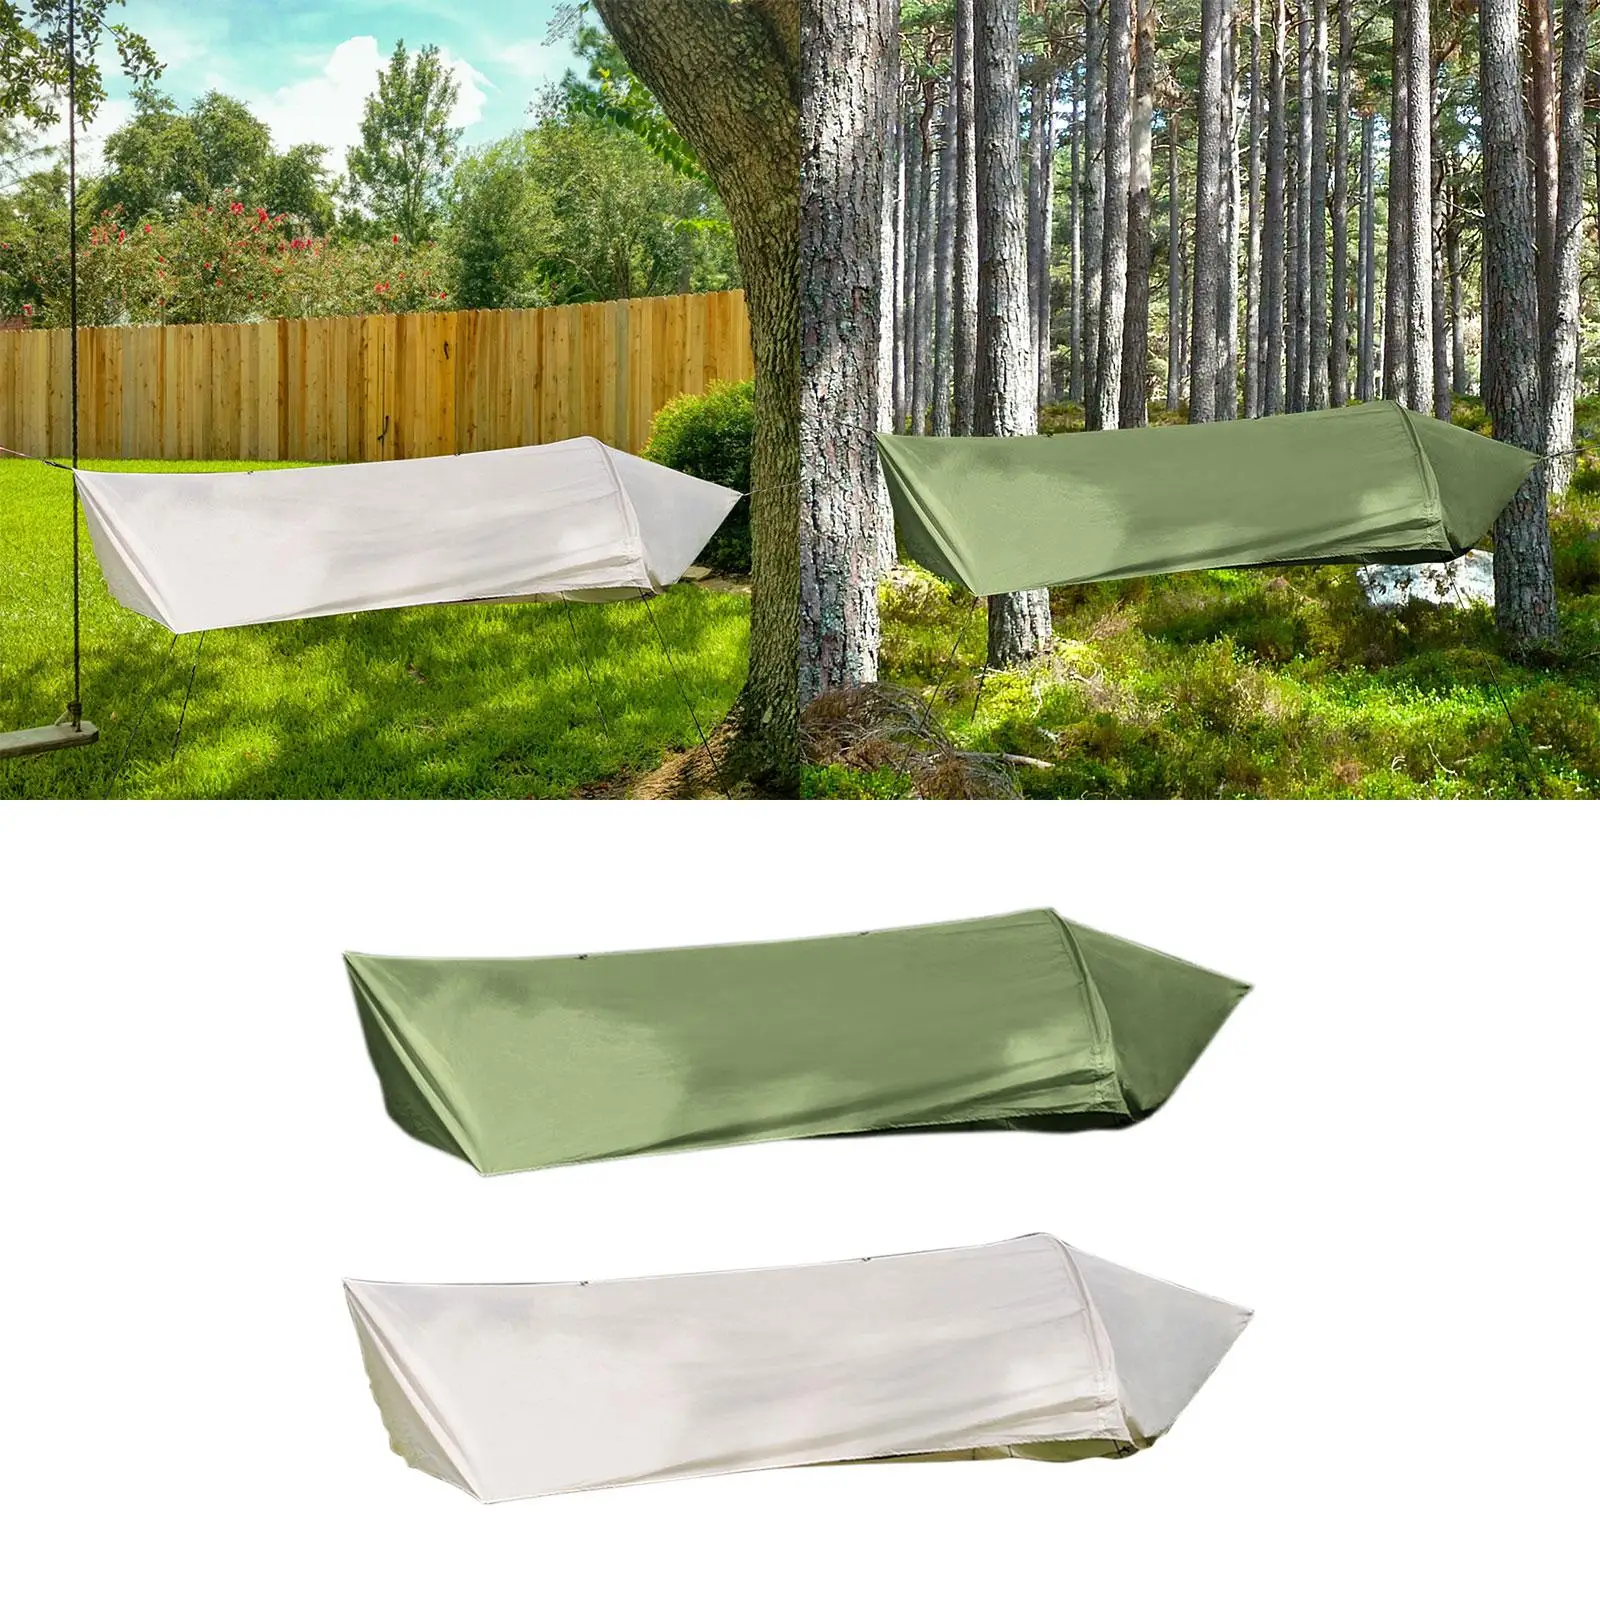 Portable Hammock Camping Hammock Fittings Lightweight Multipurpose Sleeping Bag Net Cover for Backyard Backpacking Hiking Beach